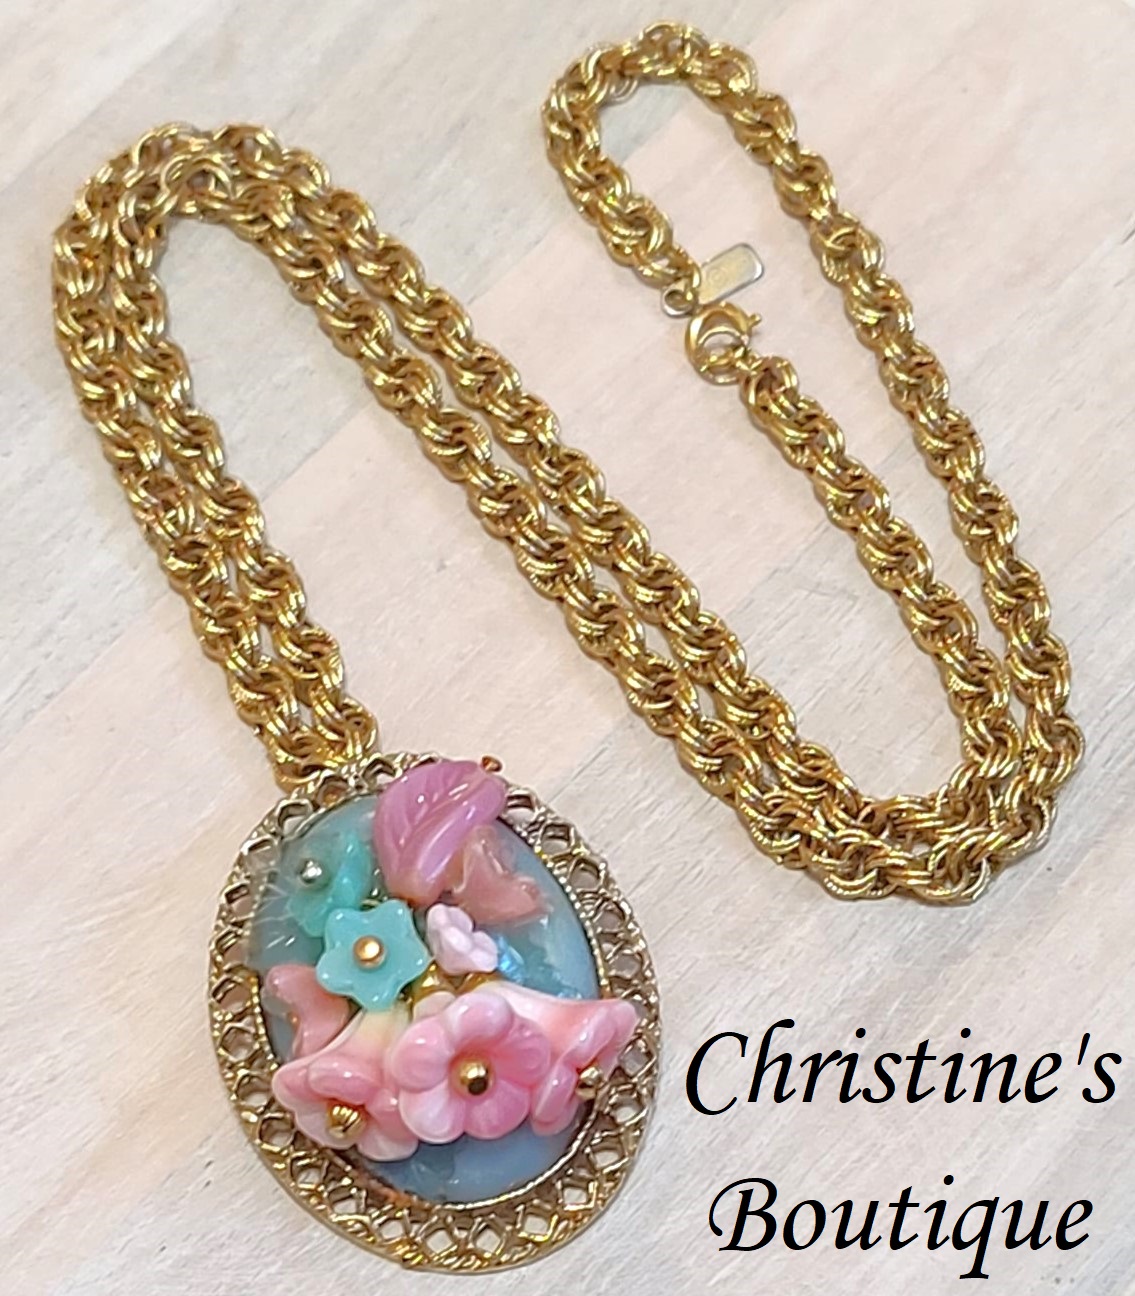 Designer Monet necklace, glass floral 3d pendant on thick goldtone weave chain, vintage statement necklace - Click Image to Close